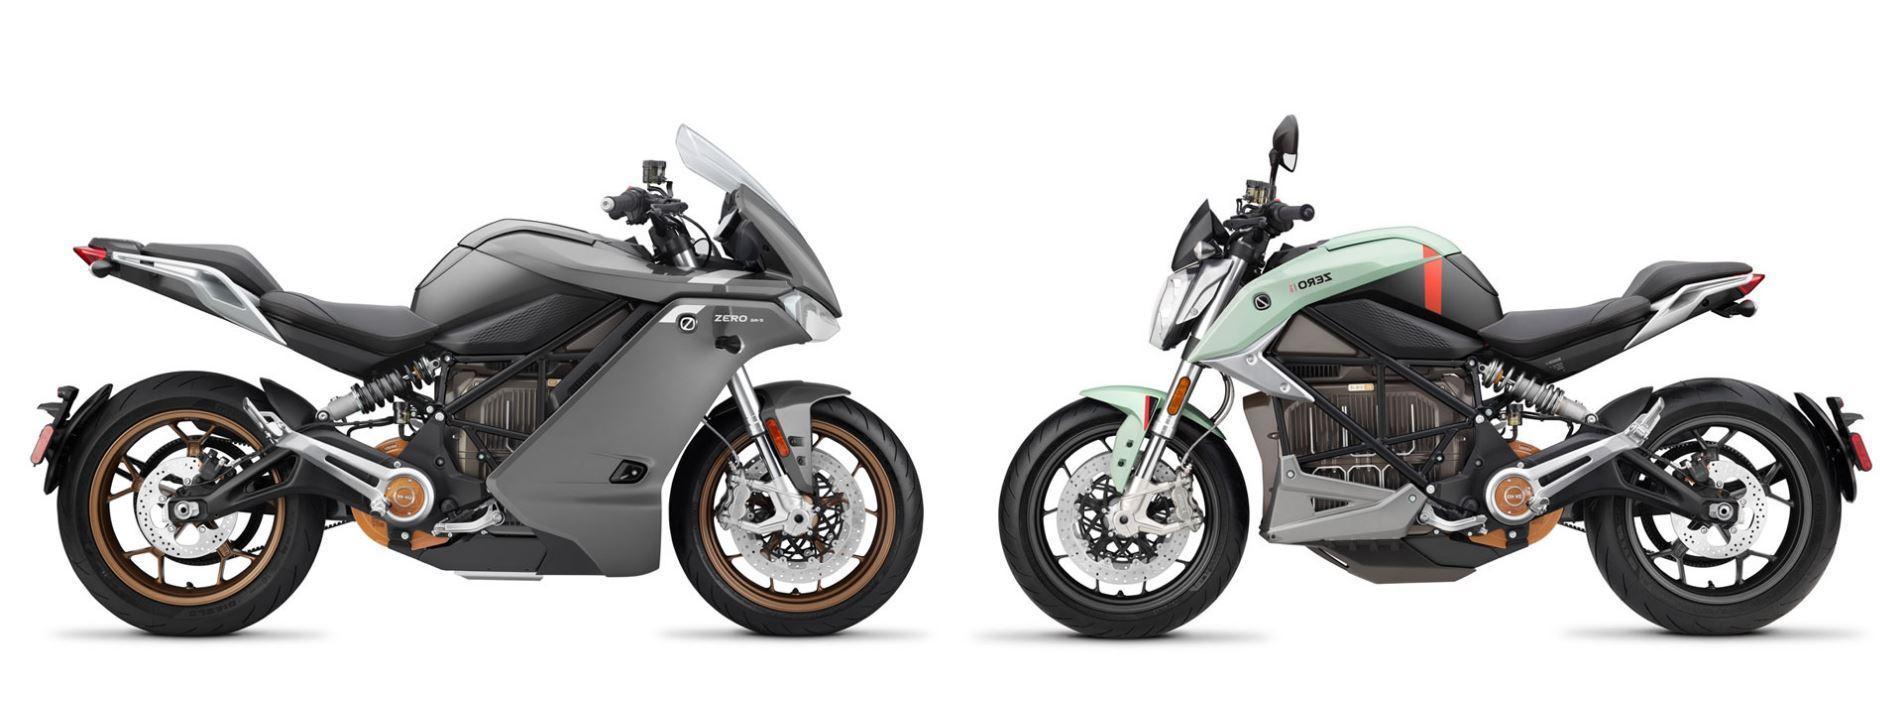 Zero motorcycle, evento motero motos eléctricas, experienceoffredom